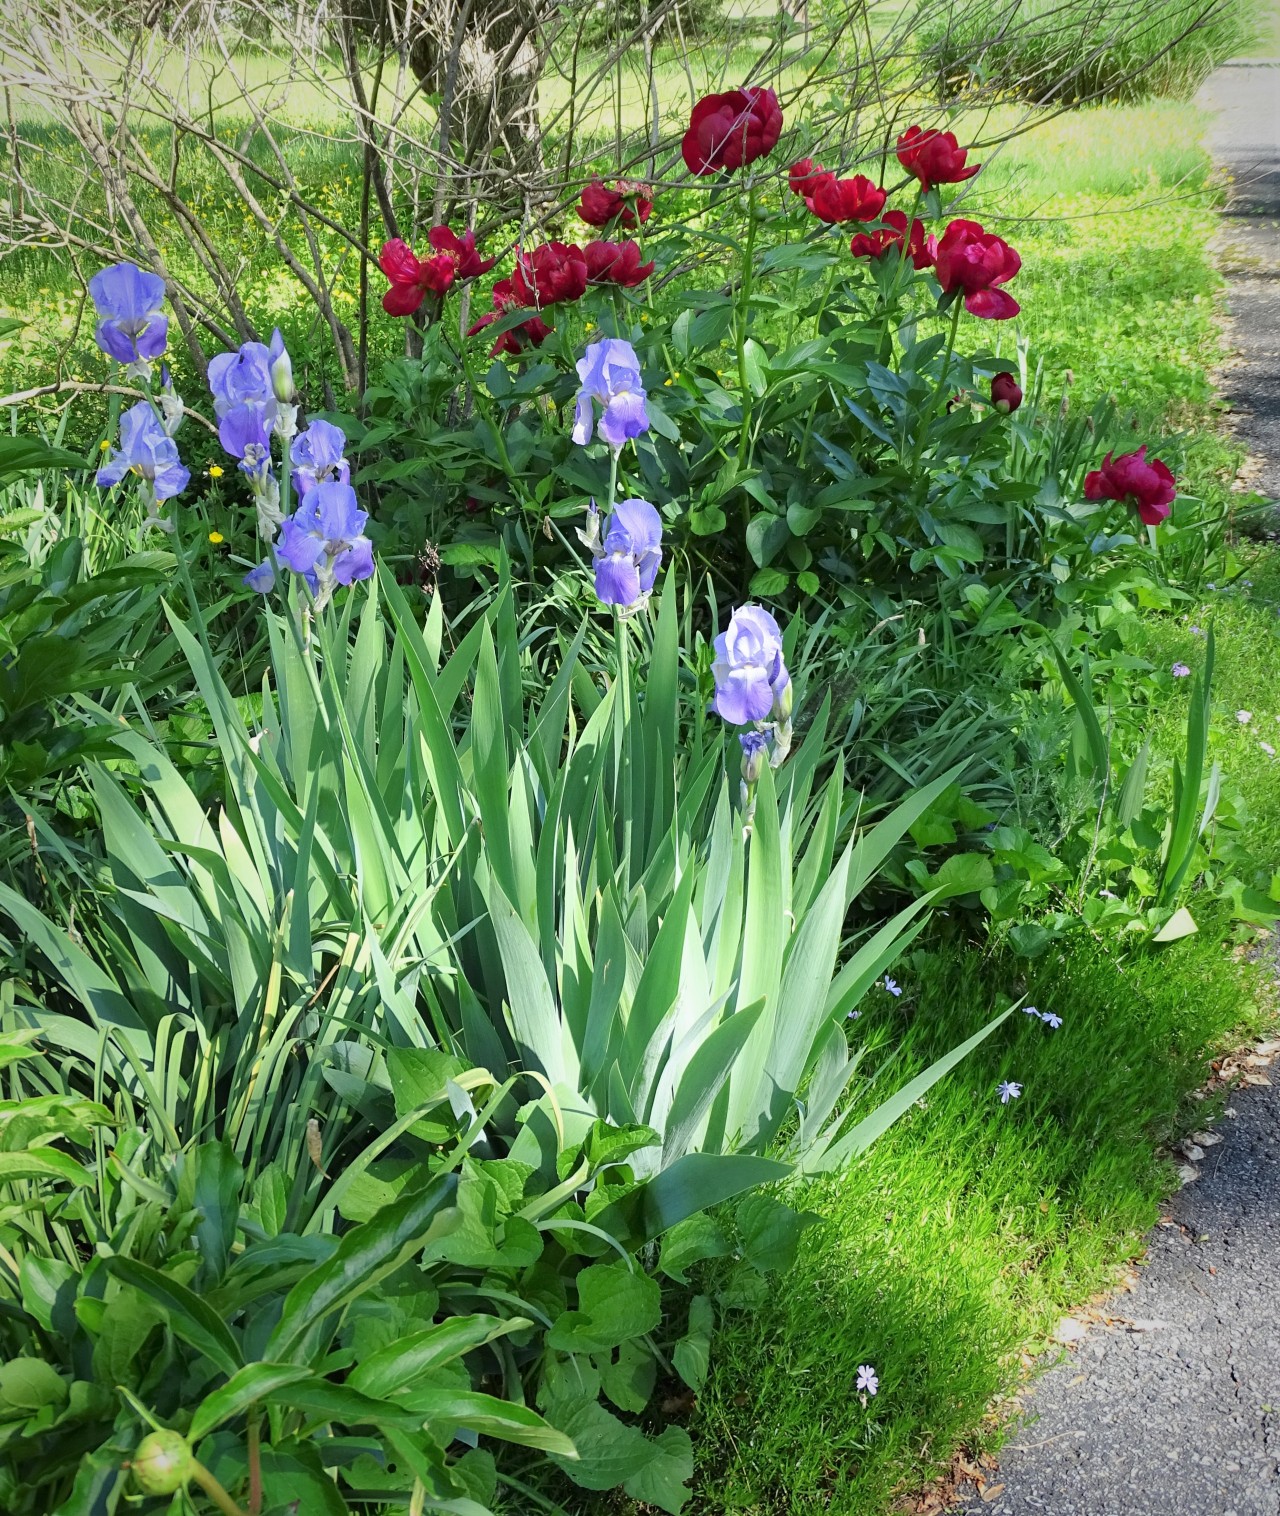 Image of Irises and forsythia plants